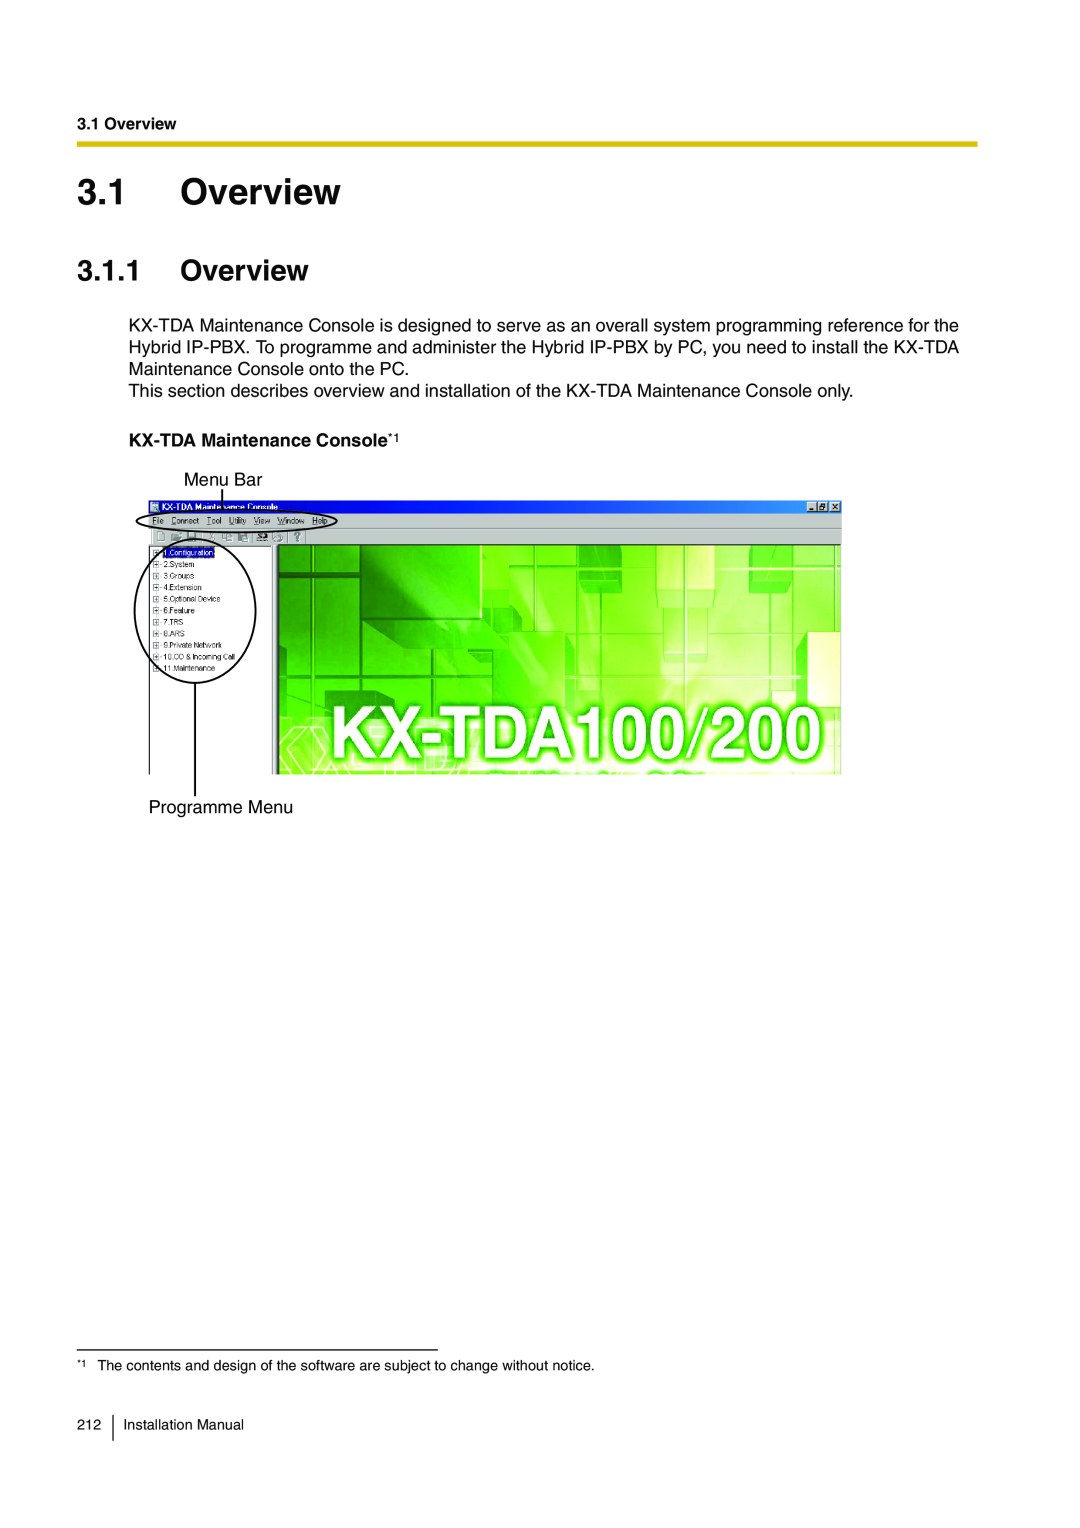 Panasonic KX-TDA100 installation manual Overview, KX-TDA Maintenance Console*1 